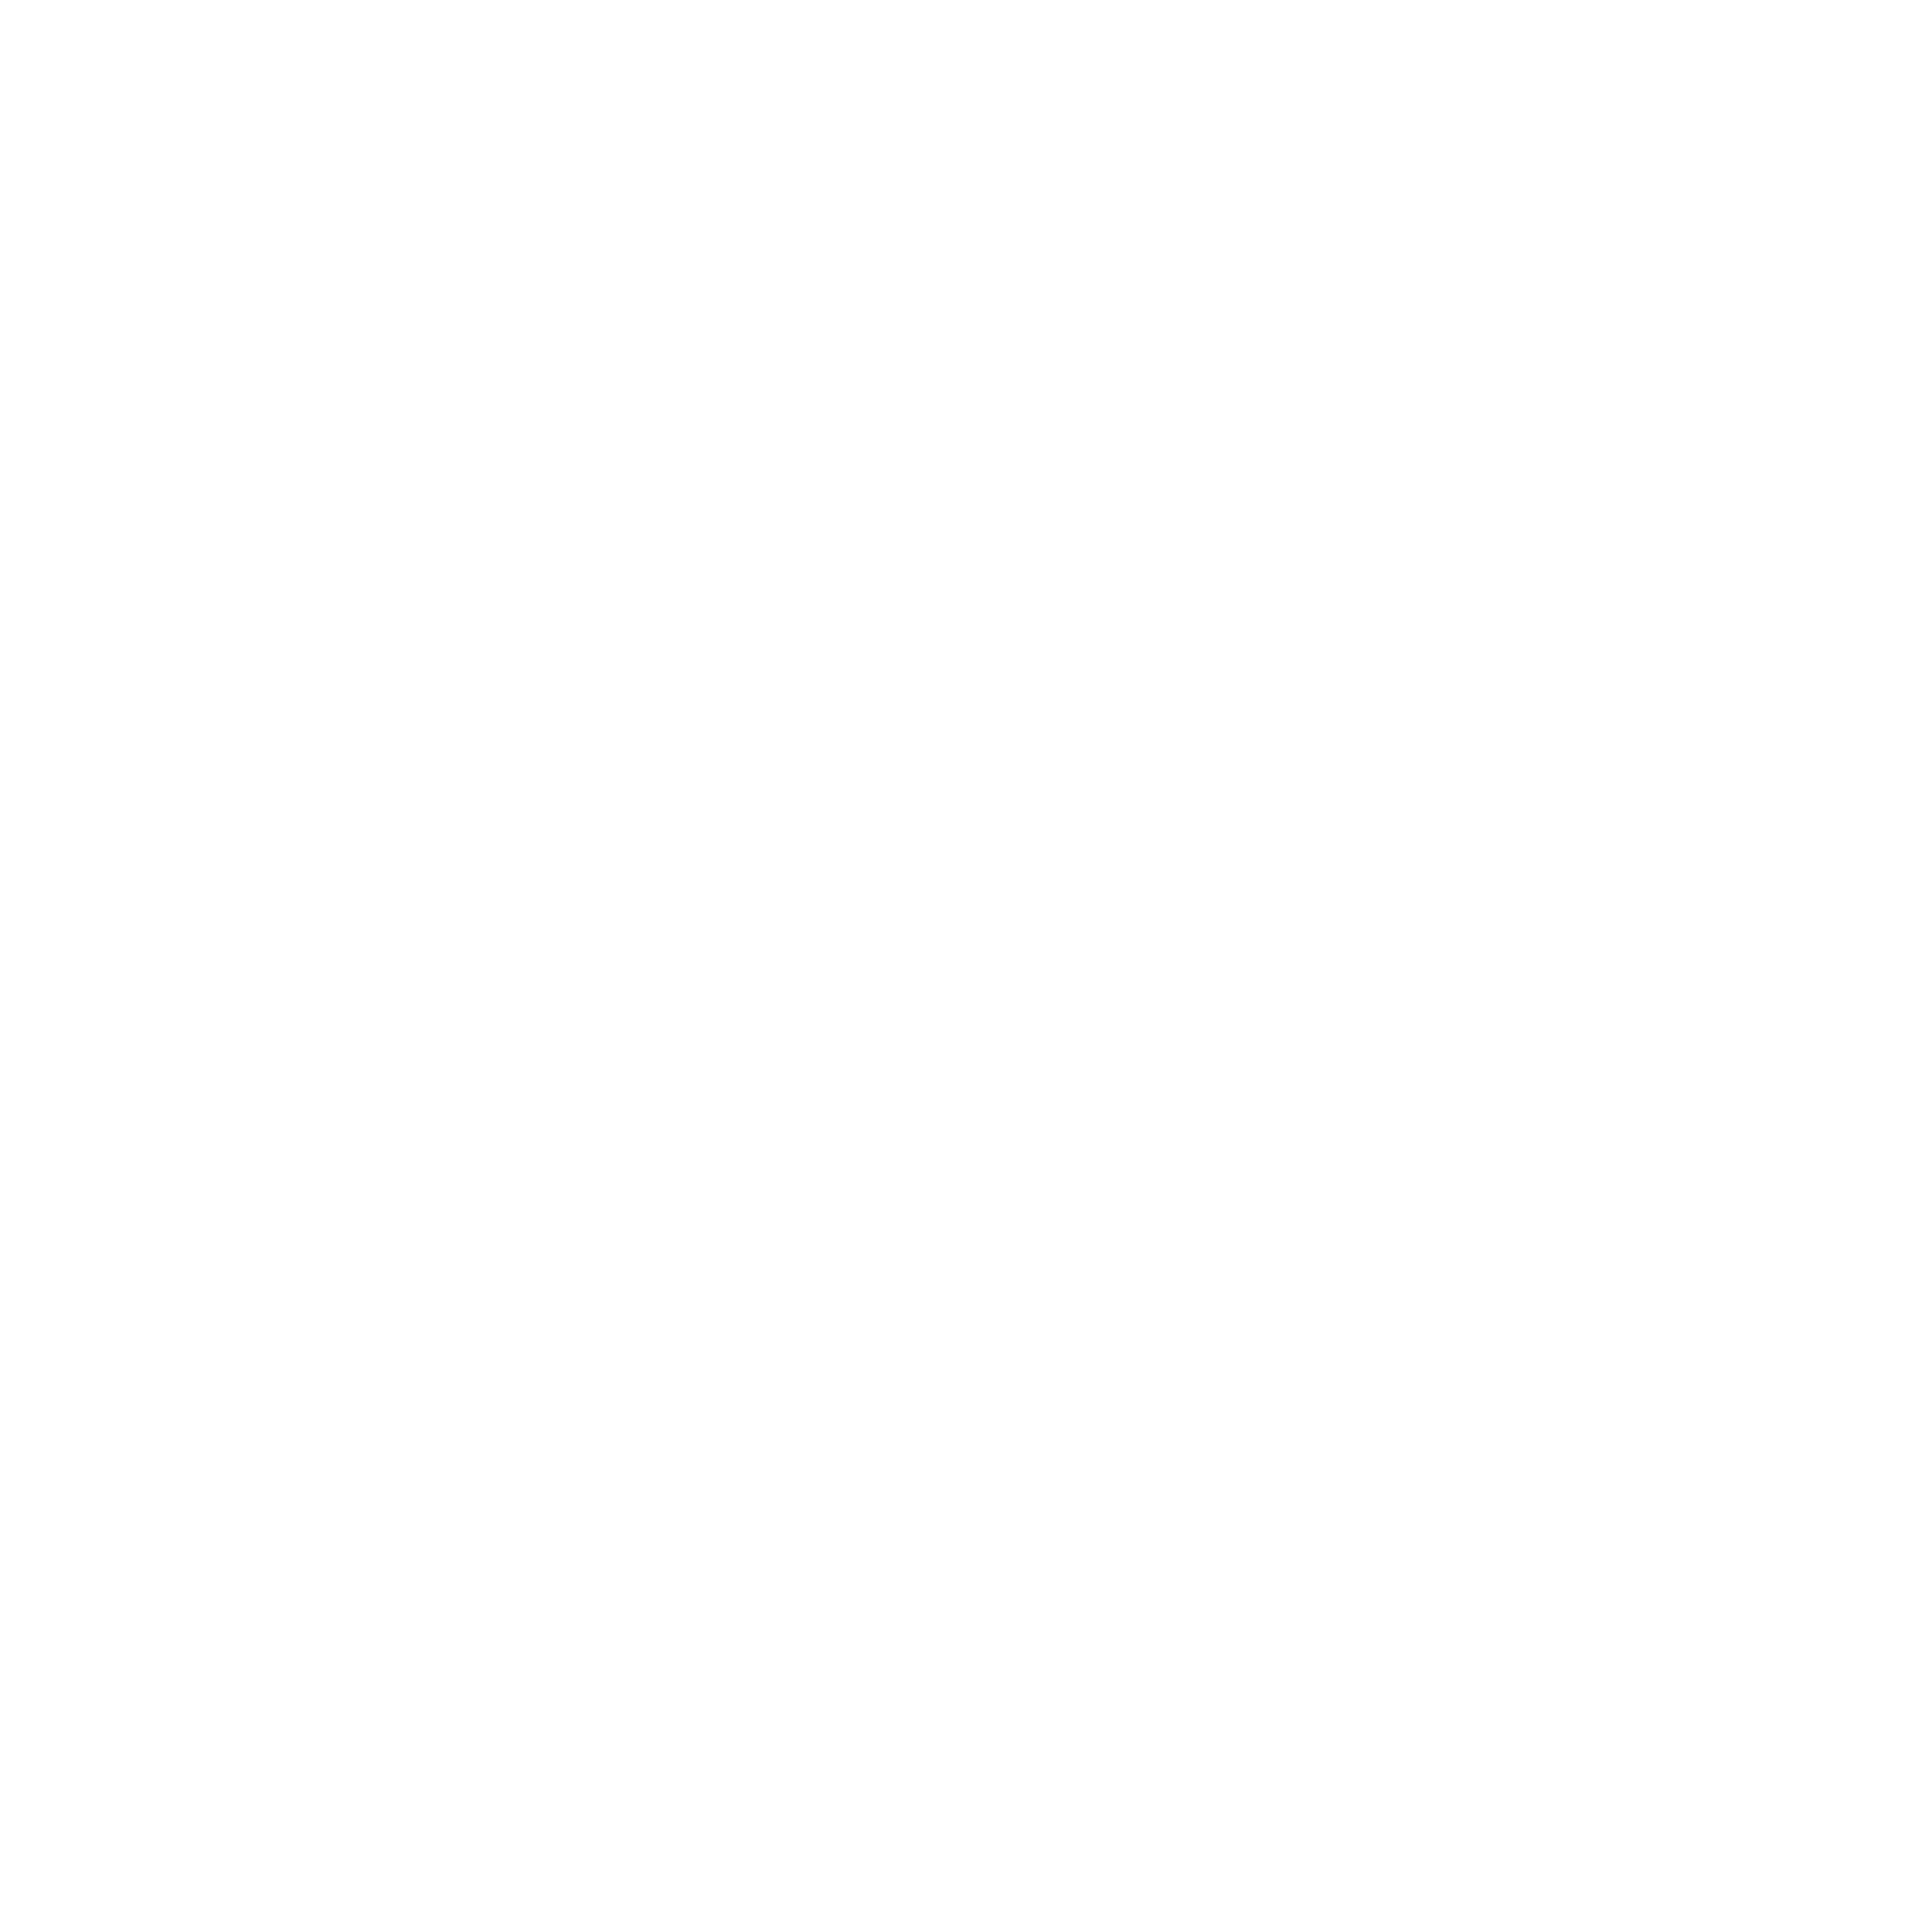 Pisteuo Design Press